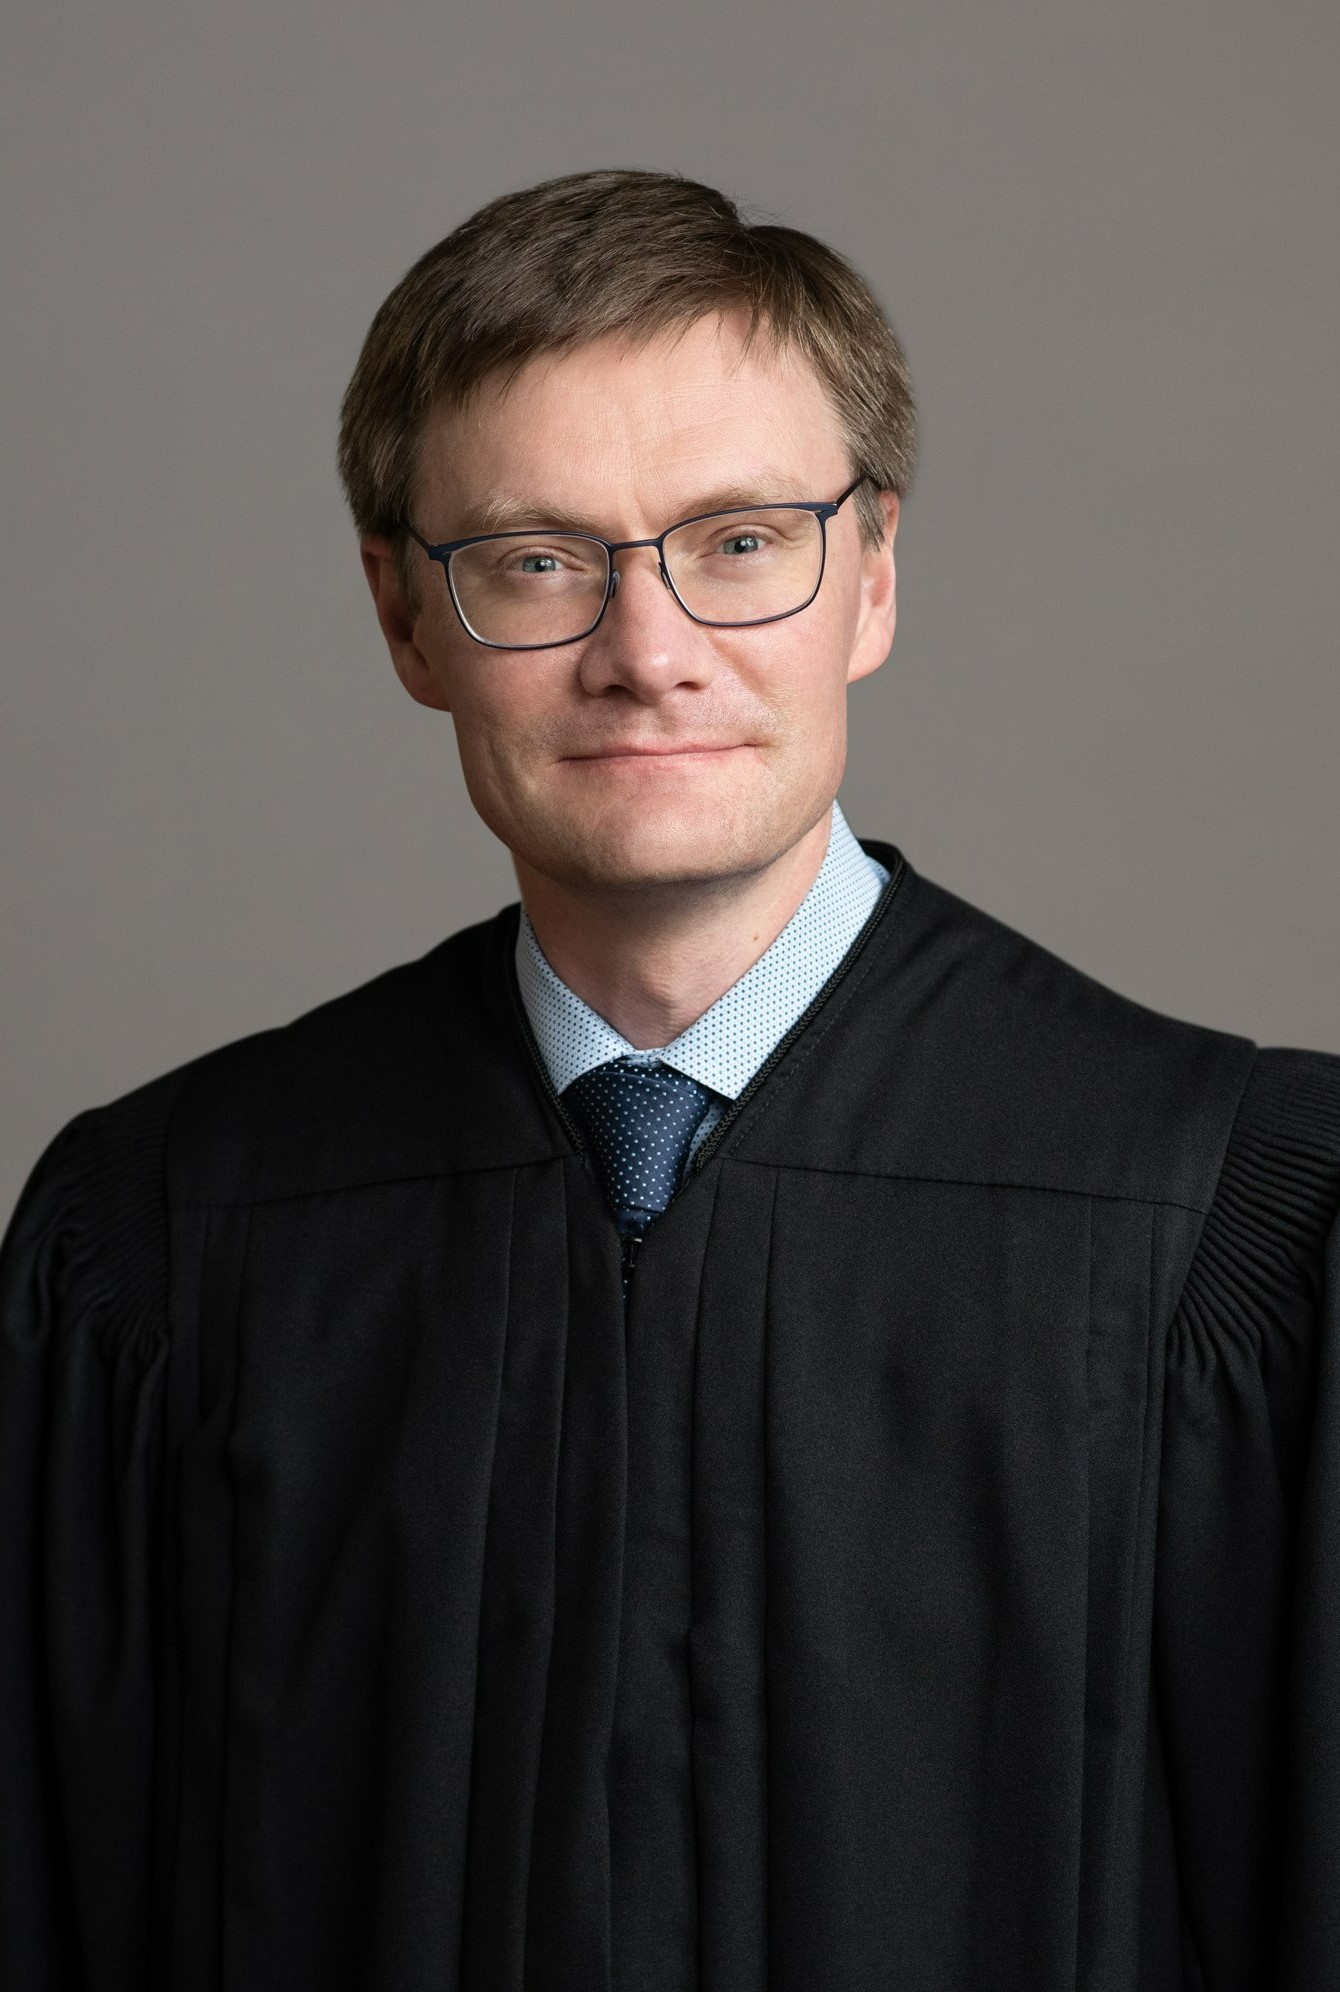 Judge Ian S. Birk